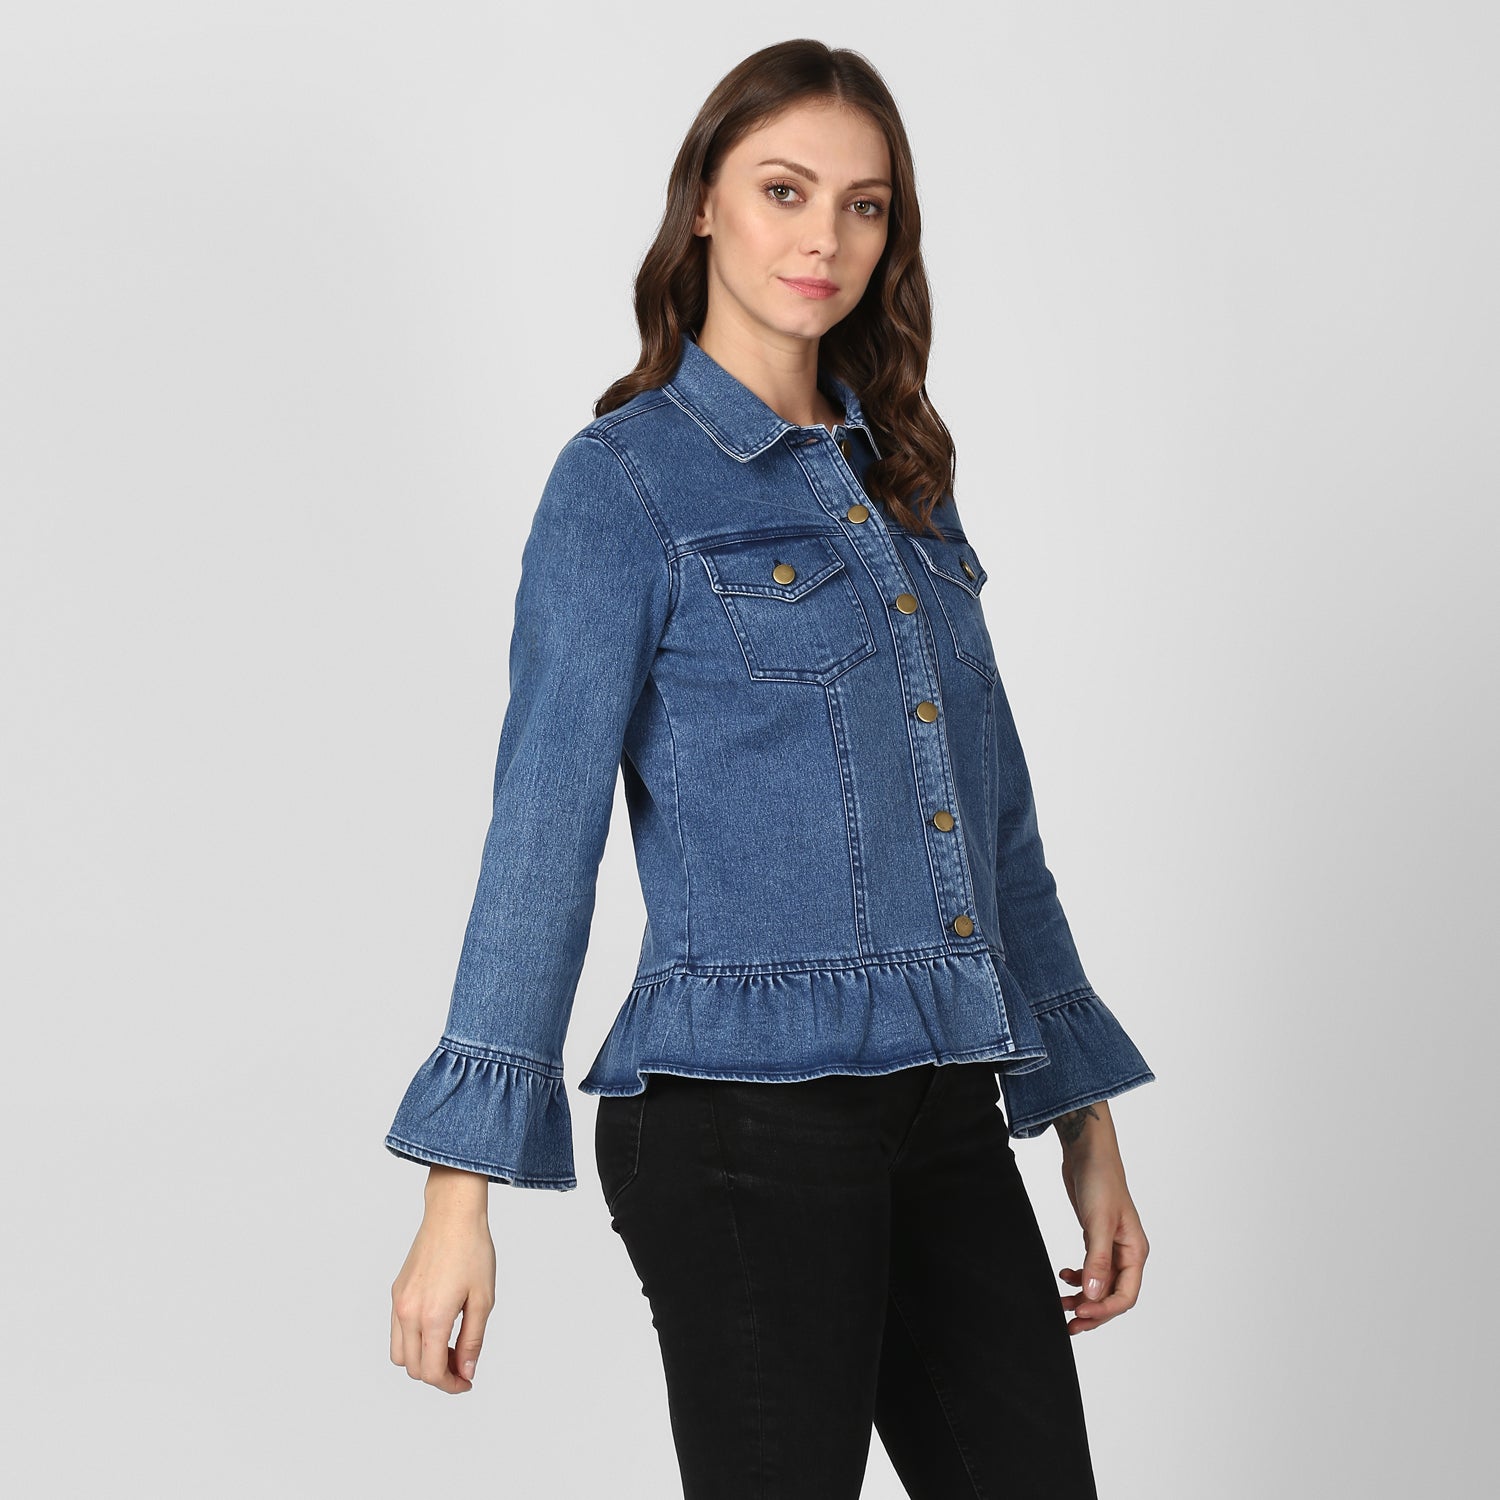 Women's Blue Denim Peplum Style Jacket - StyleStone